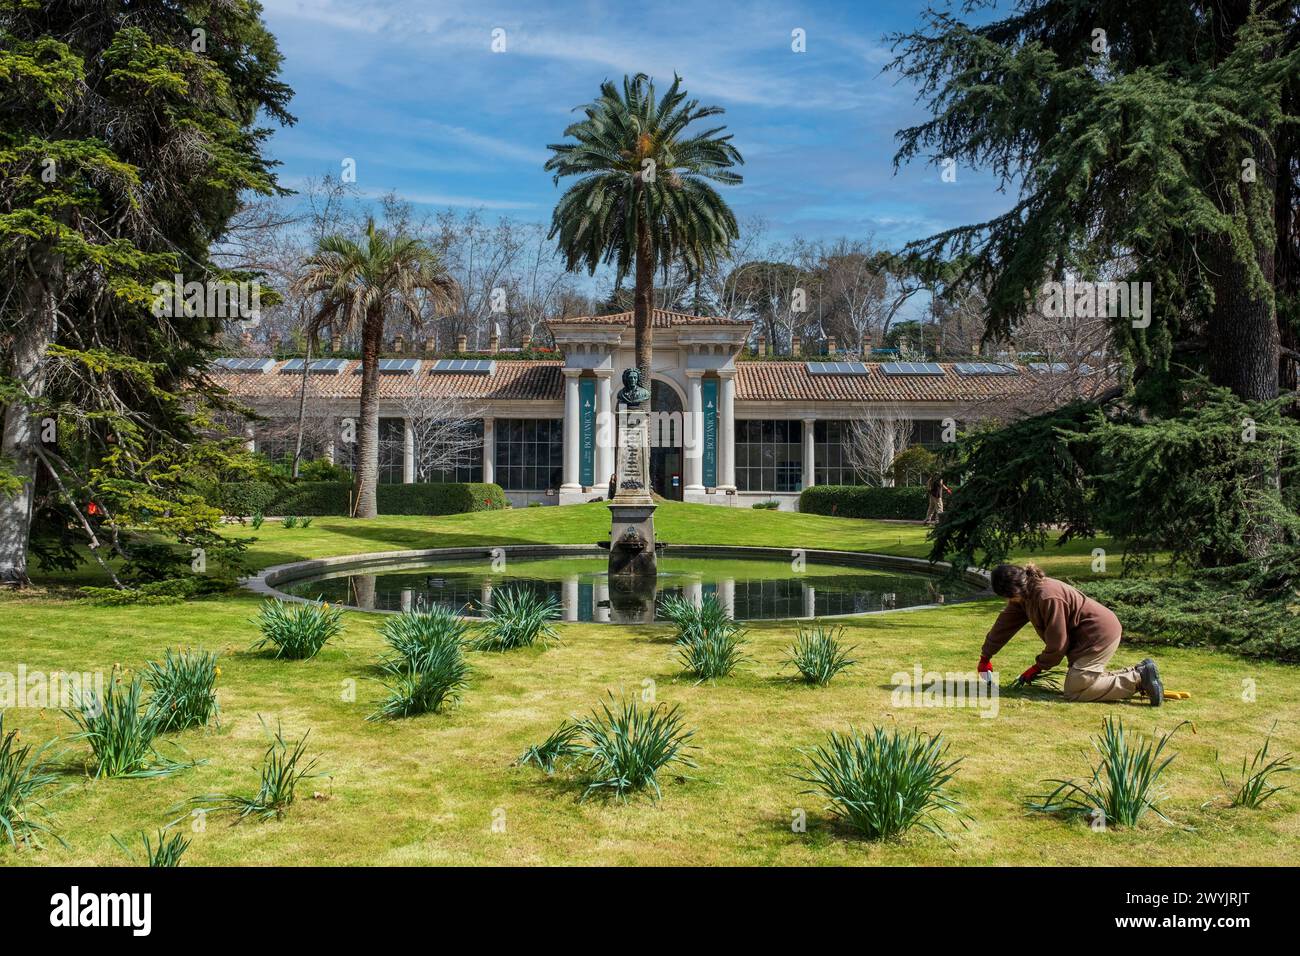 Spain, Madrid, Real Jardin Botanico, botanical garden Stock Photo